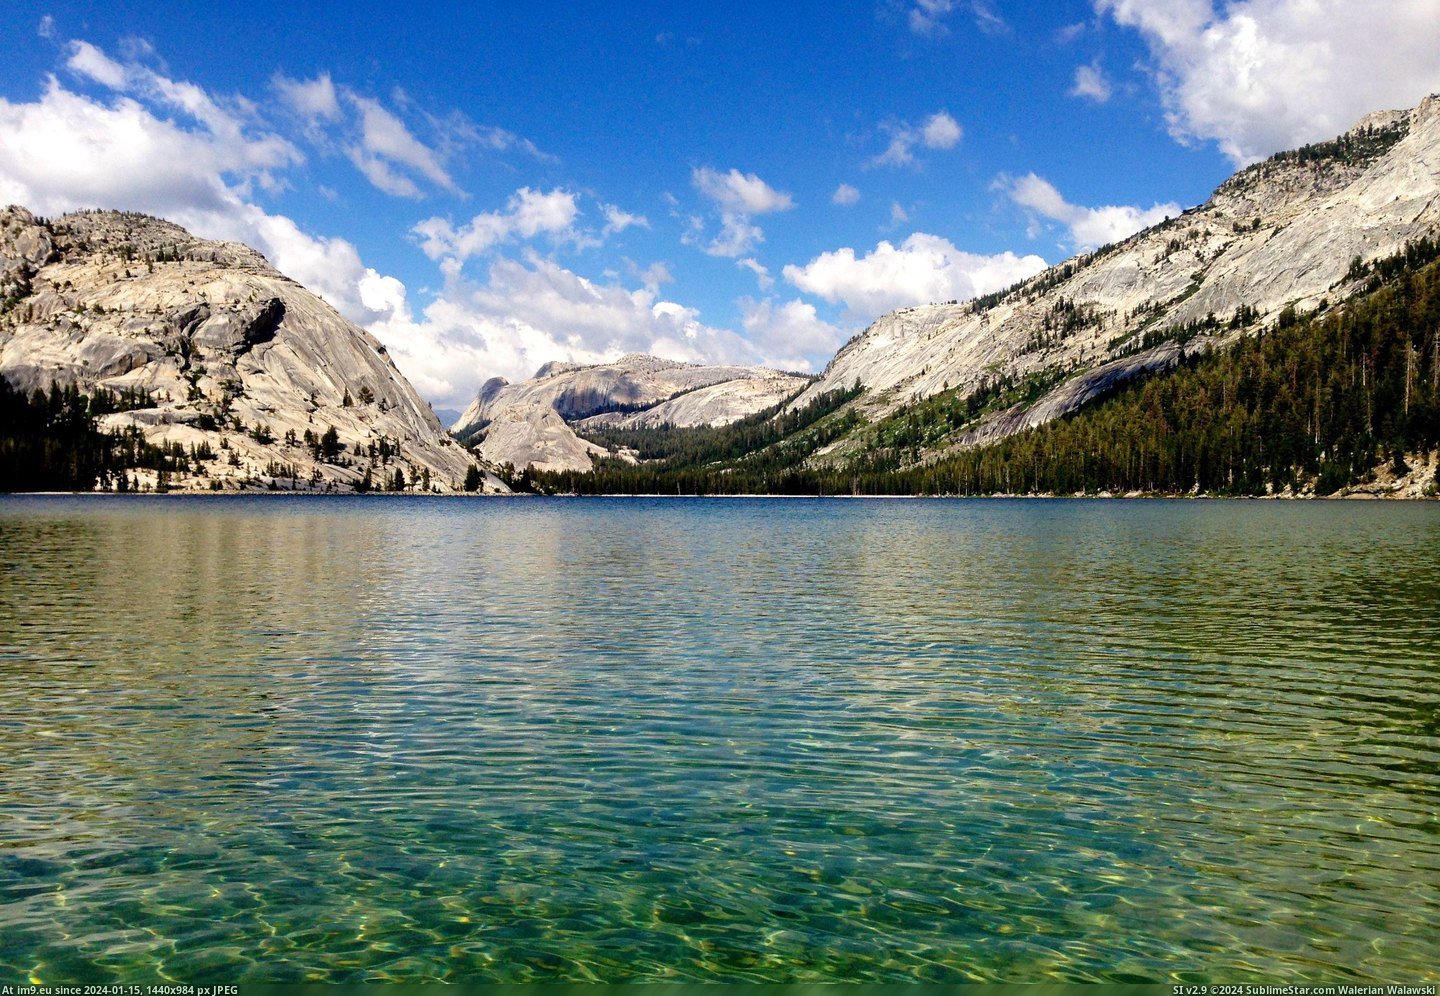 #Park #National #Yosemite #Overlooked #Tenaya #Lake #Beauty [Earthporn] Tenaya Lake, an often overlooked beauty in Yosemite National Park, CA  [3264x2243] Pic. (Image of album My r/EARTHPORN favs))